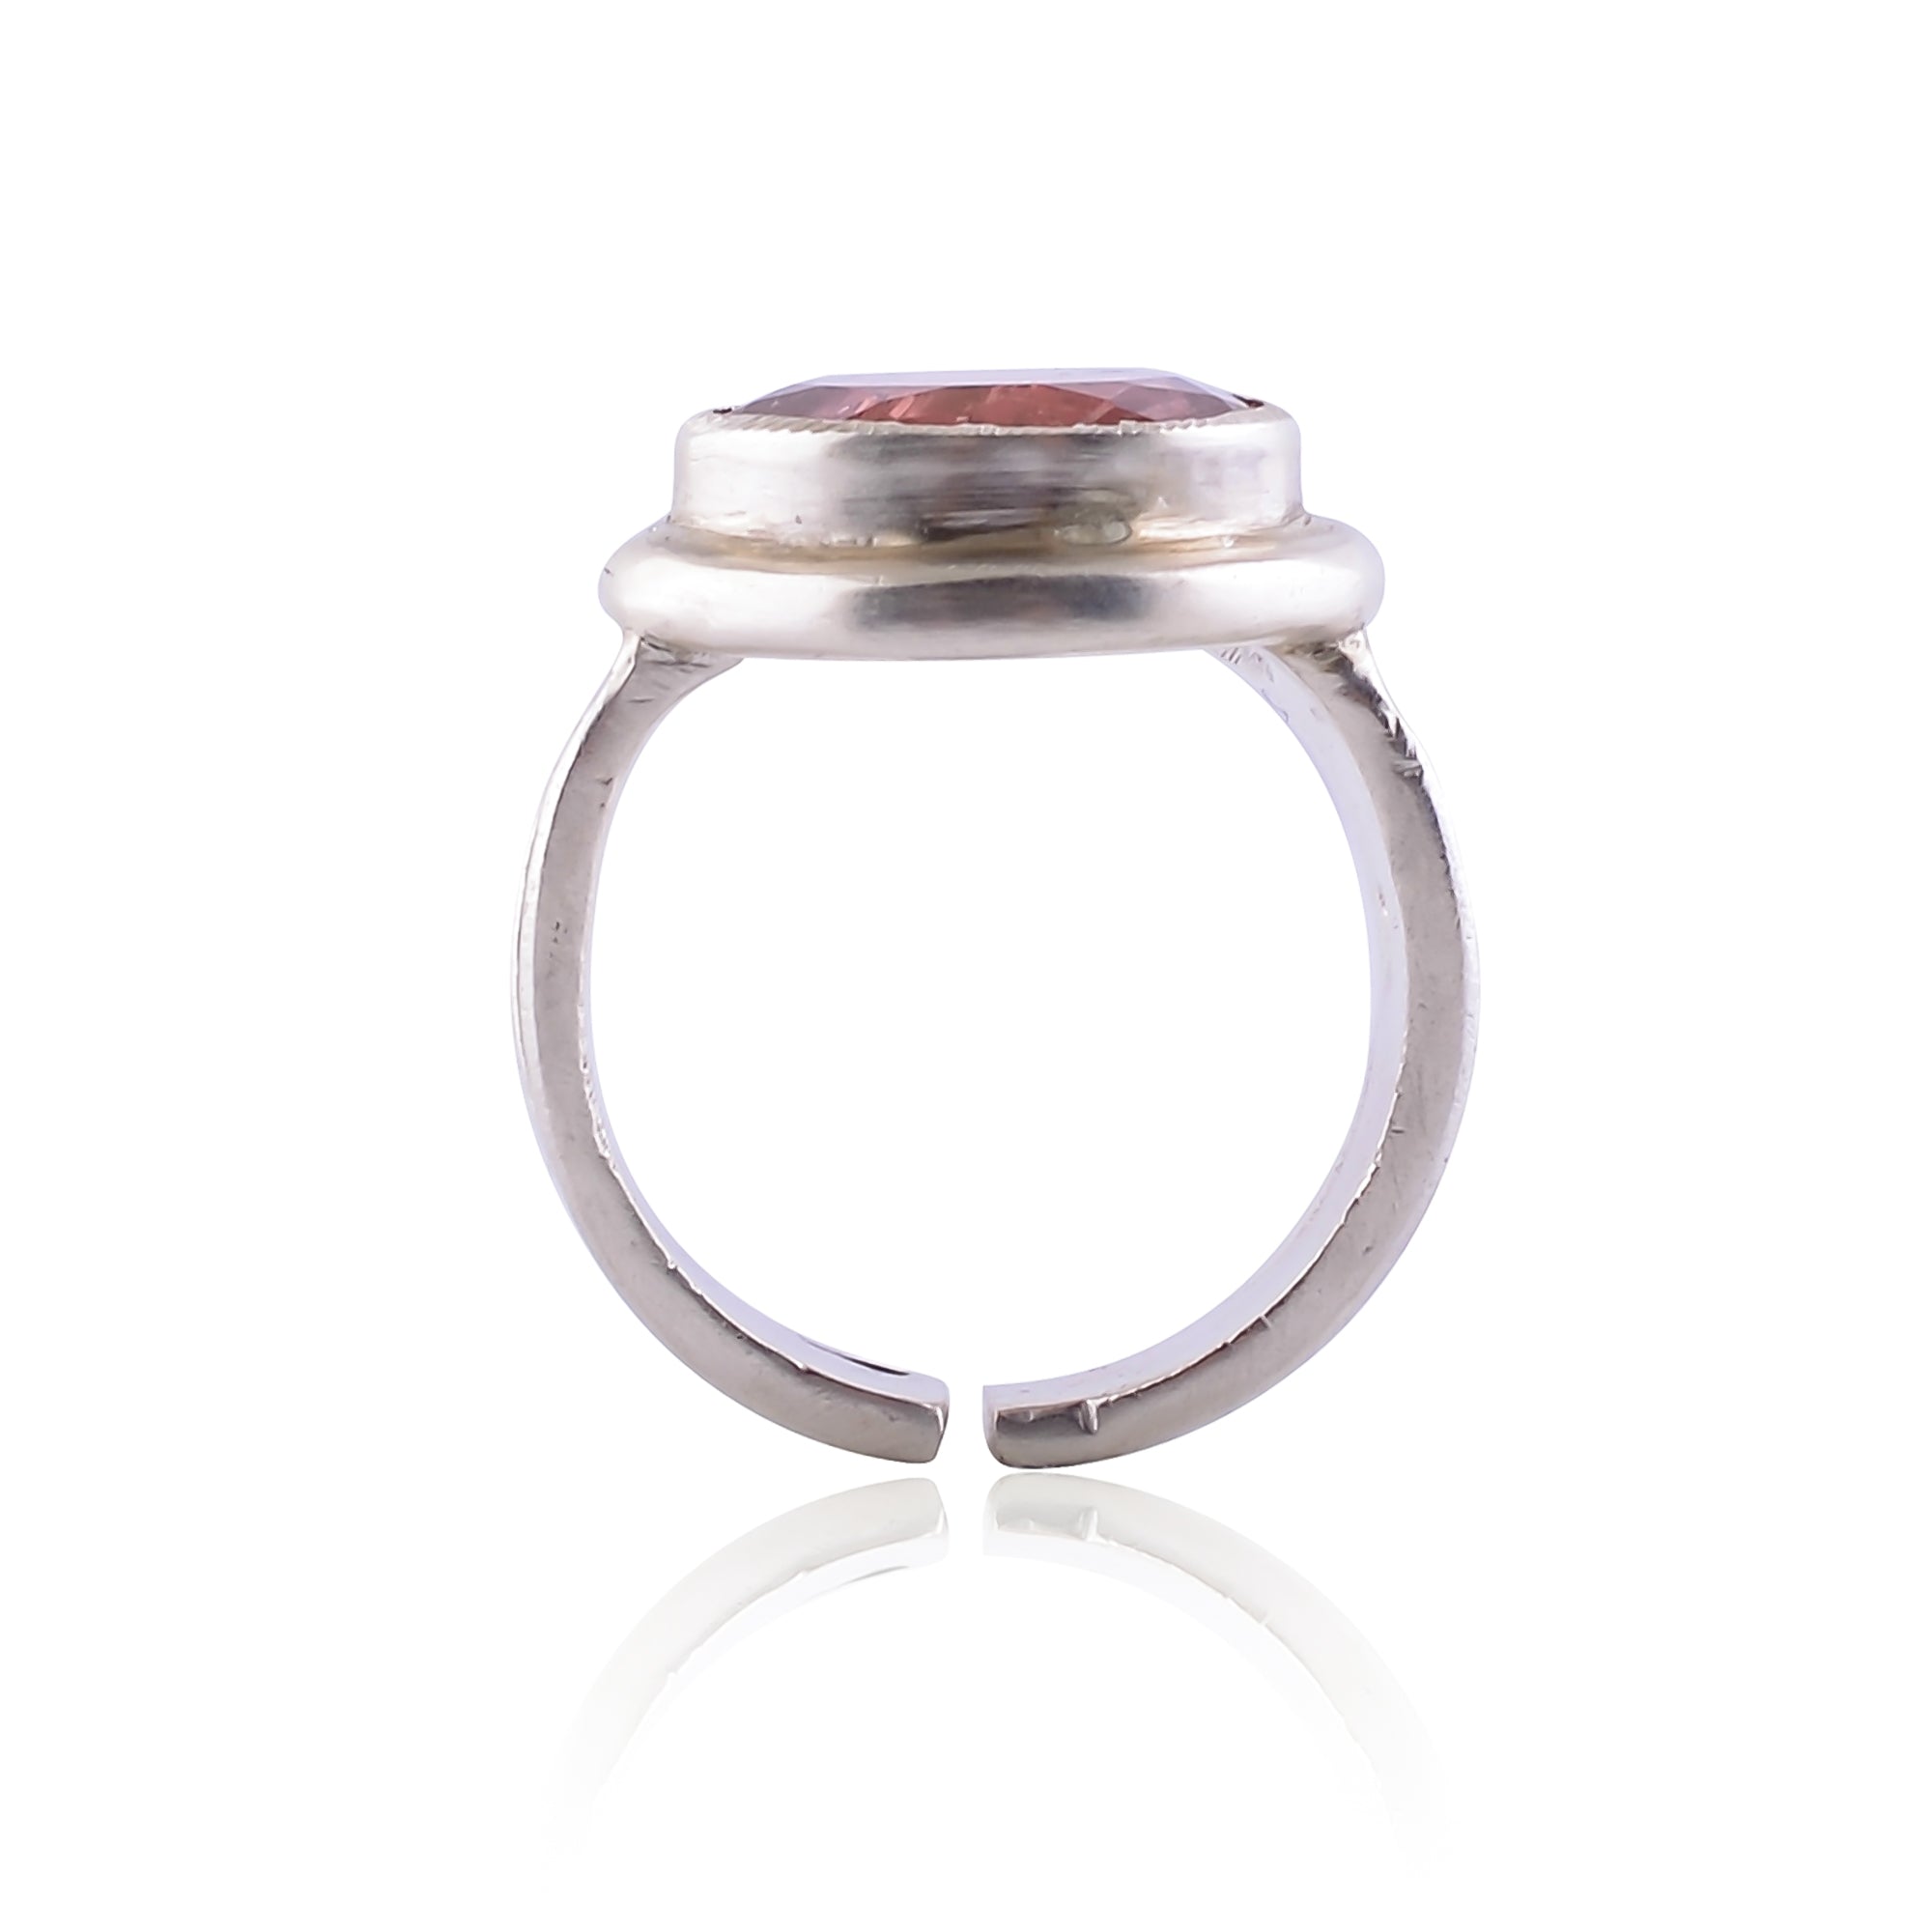 Buy Handmade Silver Tourmaline Ring